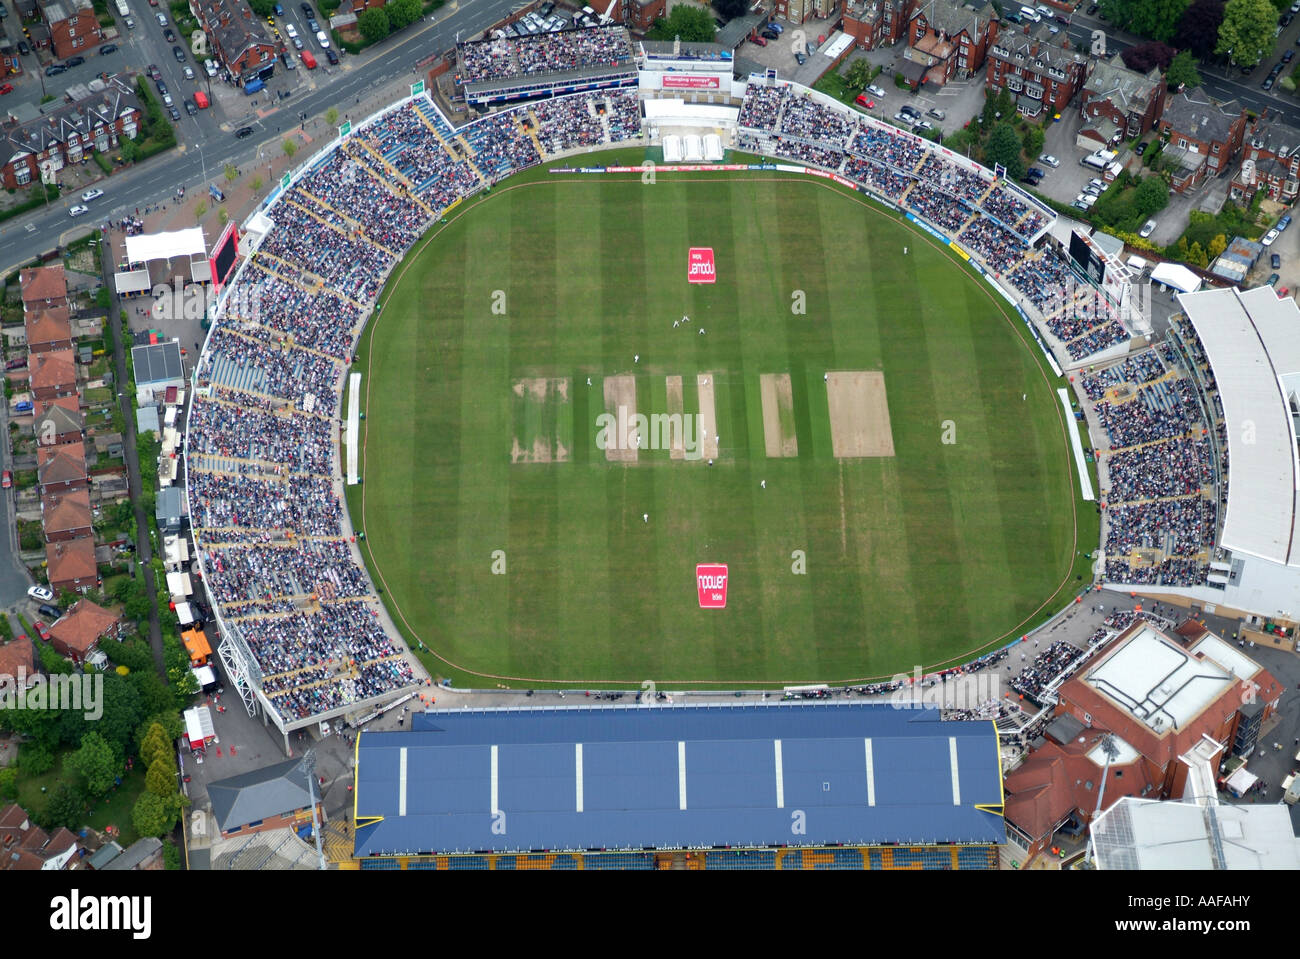 Le terrain de cricket de Headingley, Leeds, Angleterre V Antilles test match, Juin 2007 Banque D'Images